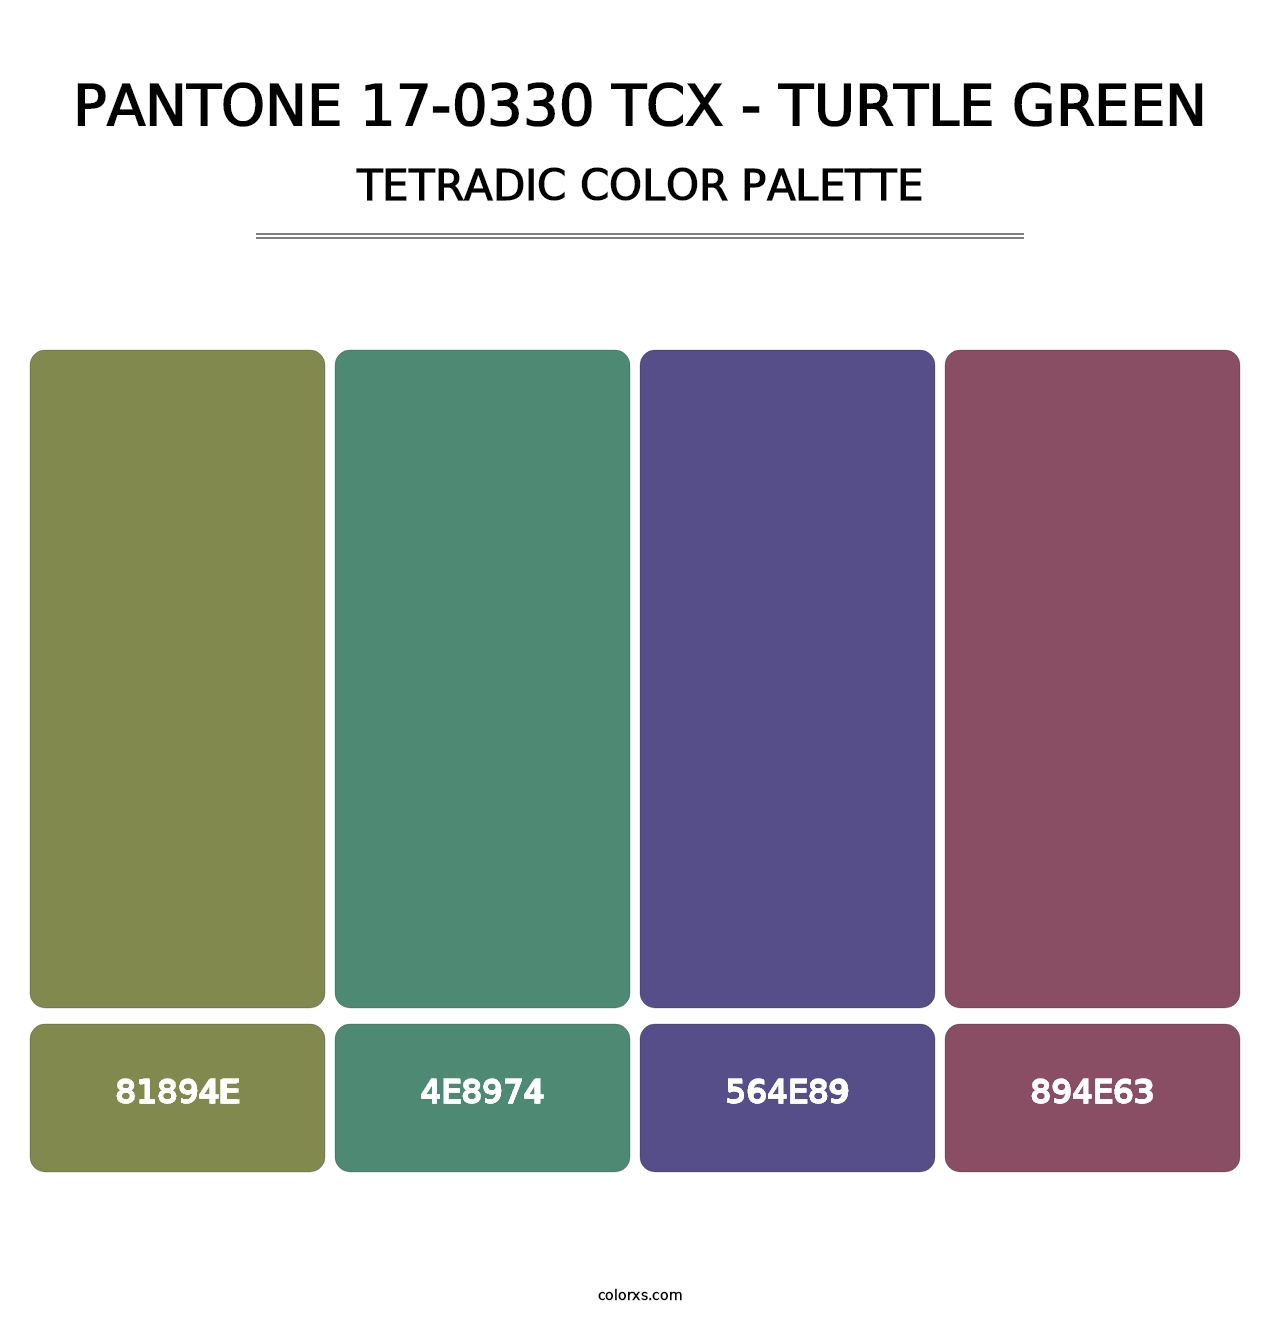 PANTONE 17-0330 TCX - Turtle Green - Tetradic Color Palette